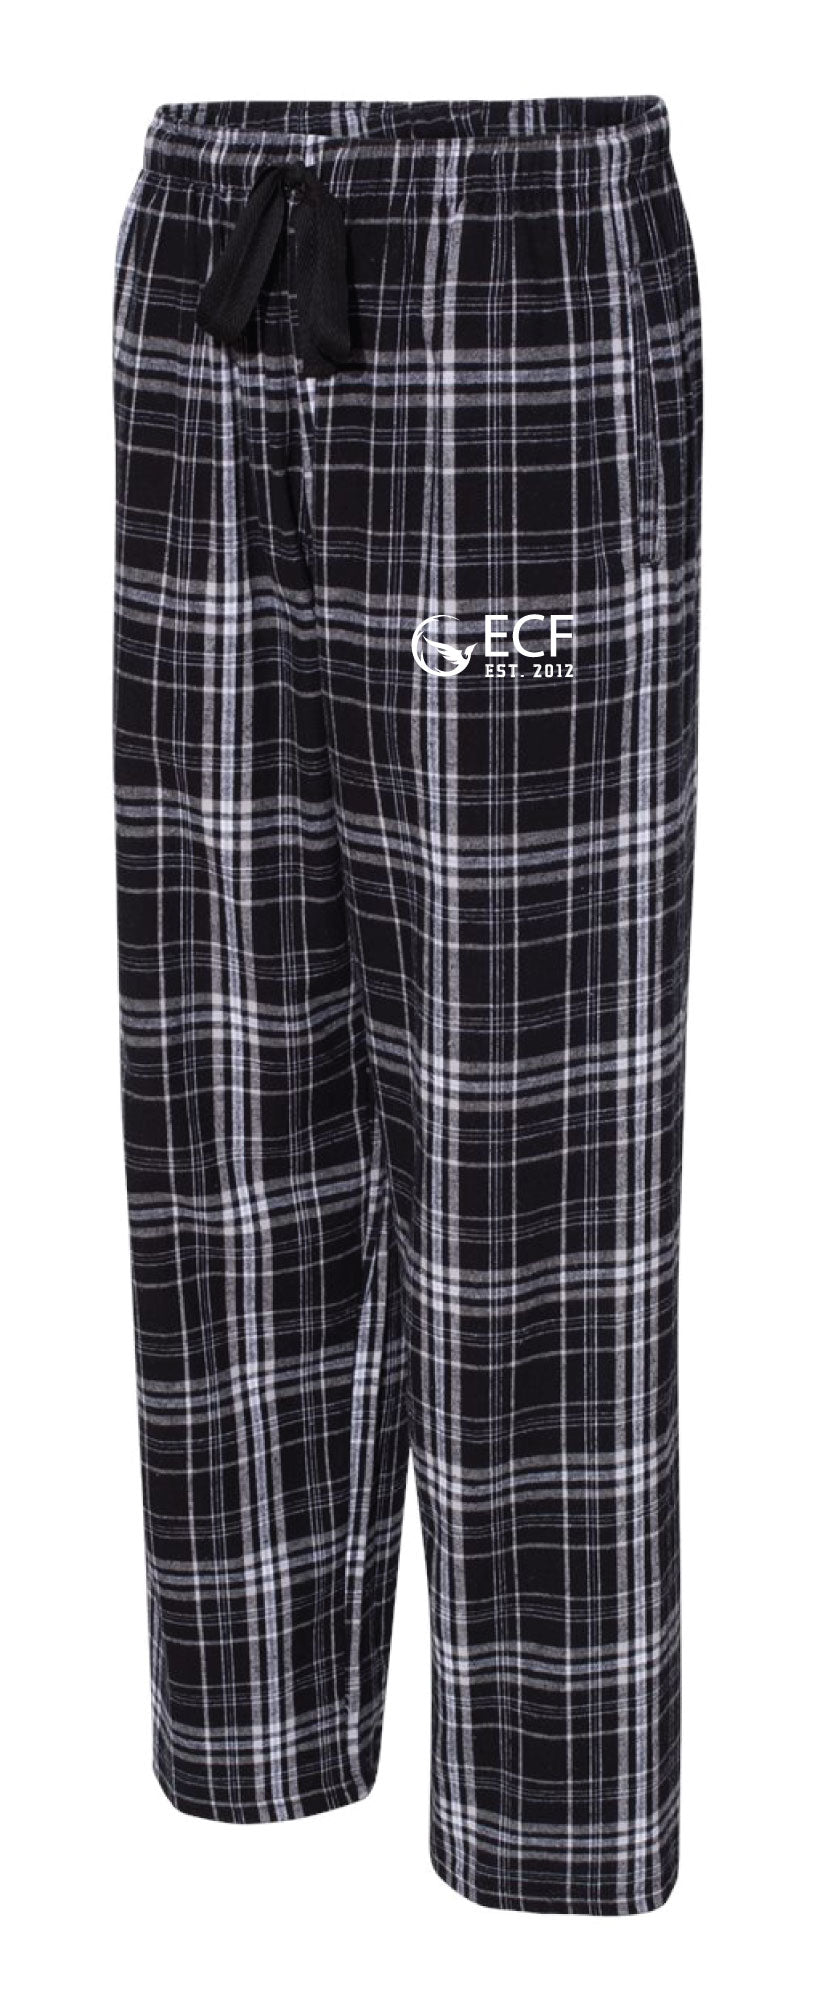 Emersion Crossfit Flannel Pajama Pants - Black/Grey - 5KounT2018